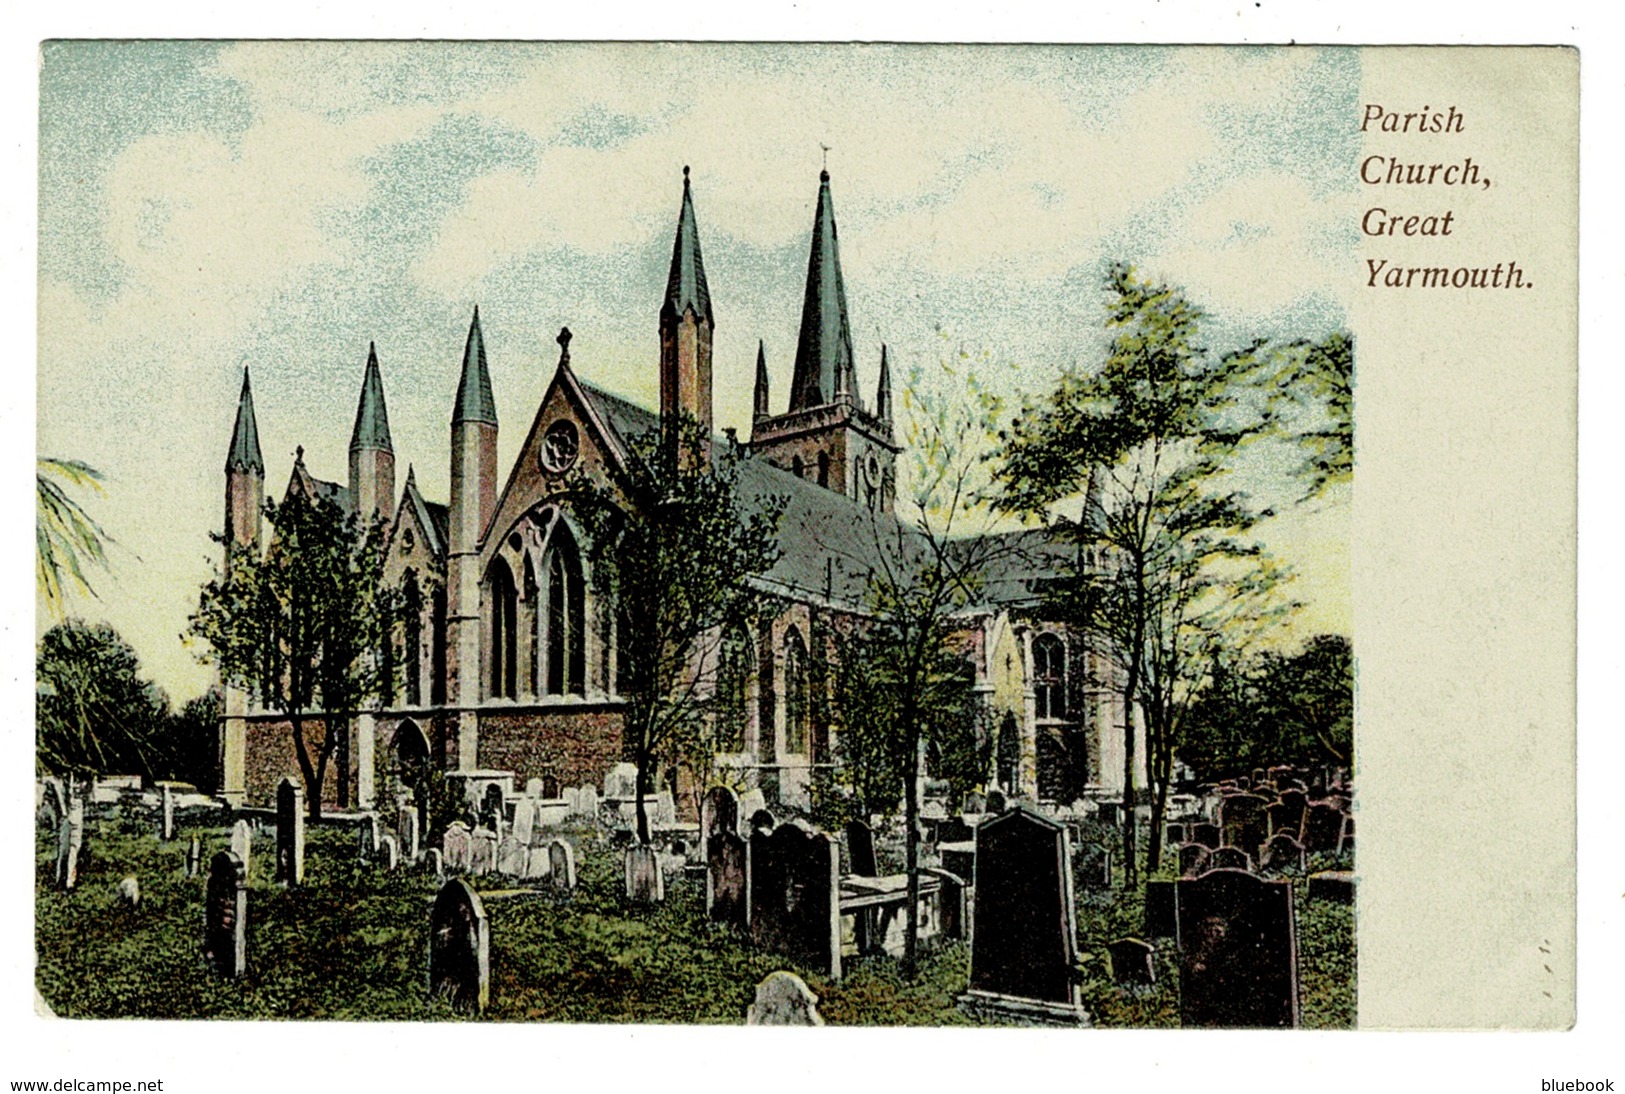 Ref 1362 - Early Postcard - Great Yarmouth Parish Church & Graveyard - Norfolk - Great Yarmouth